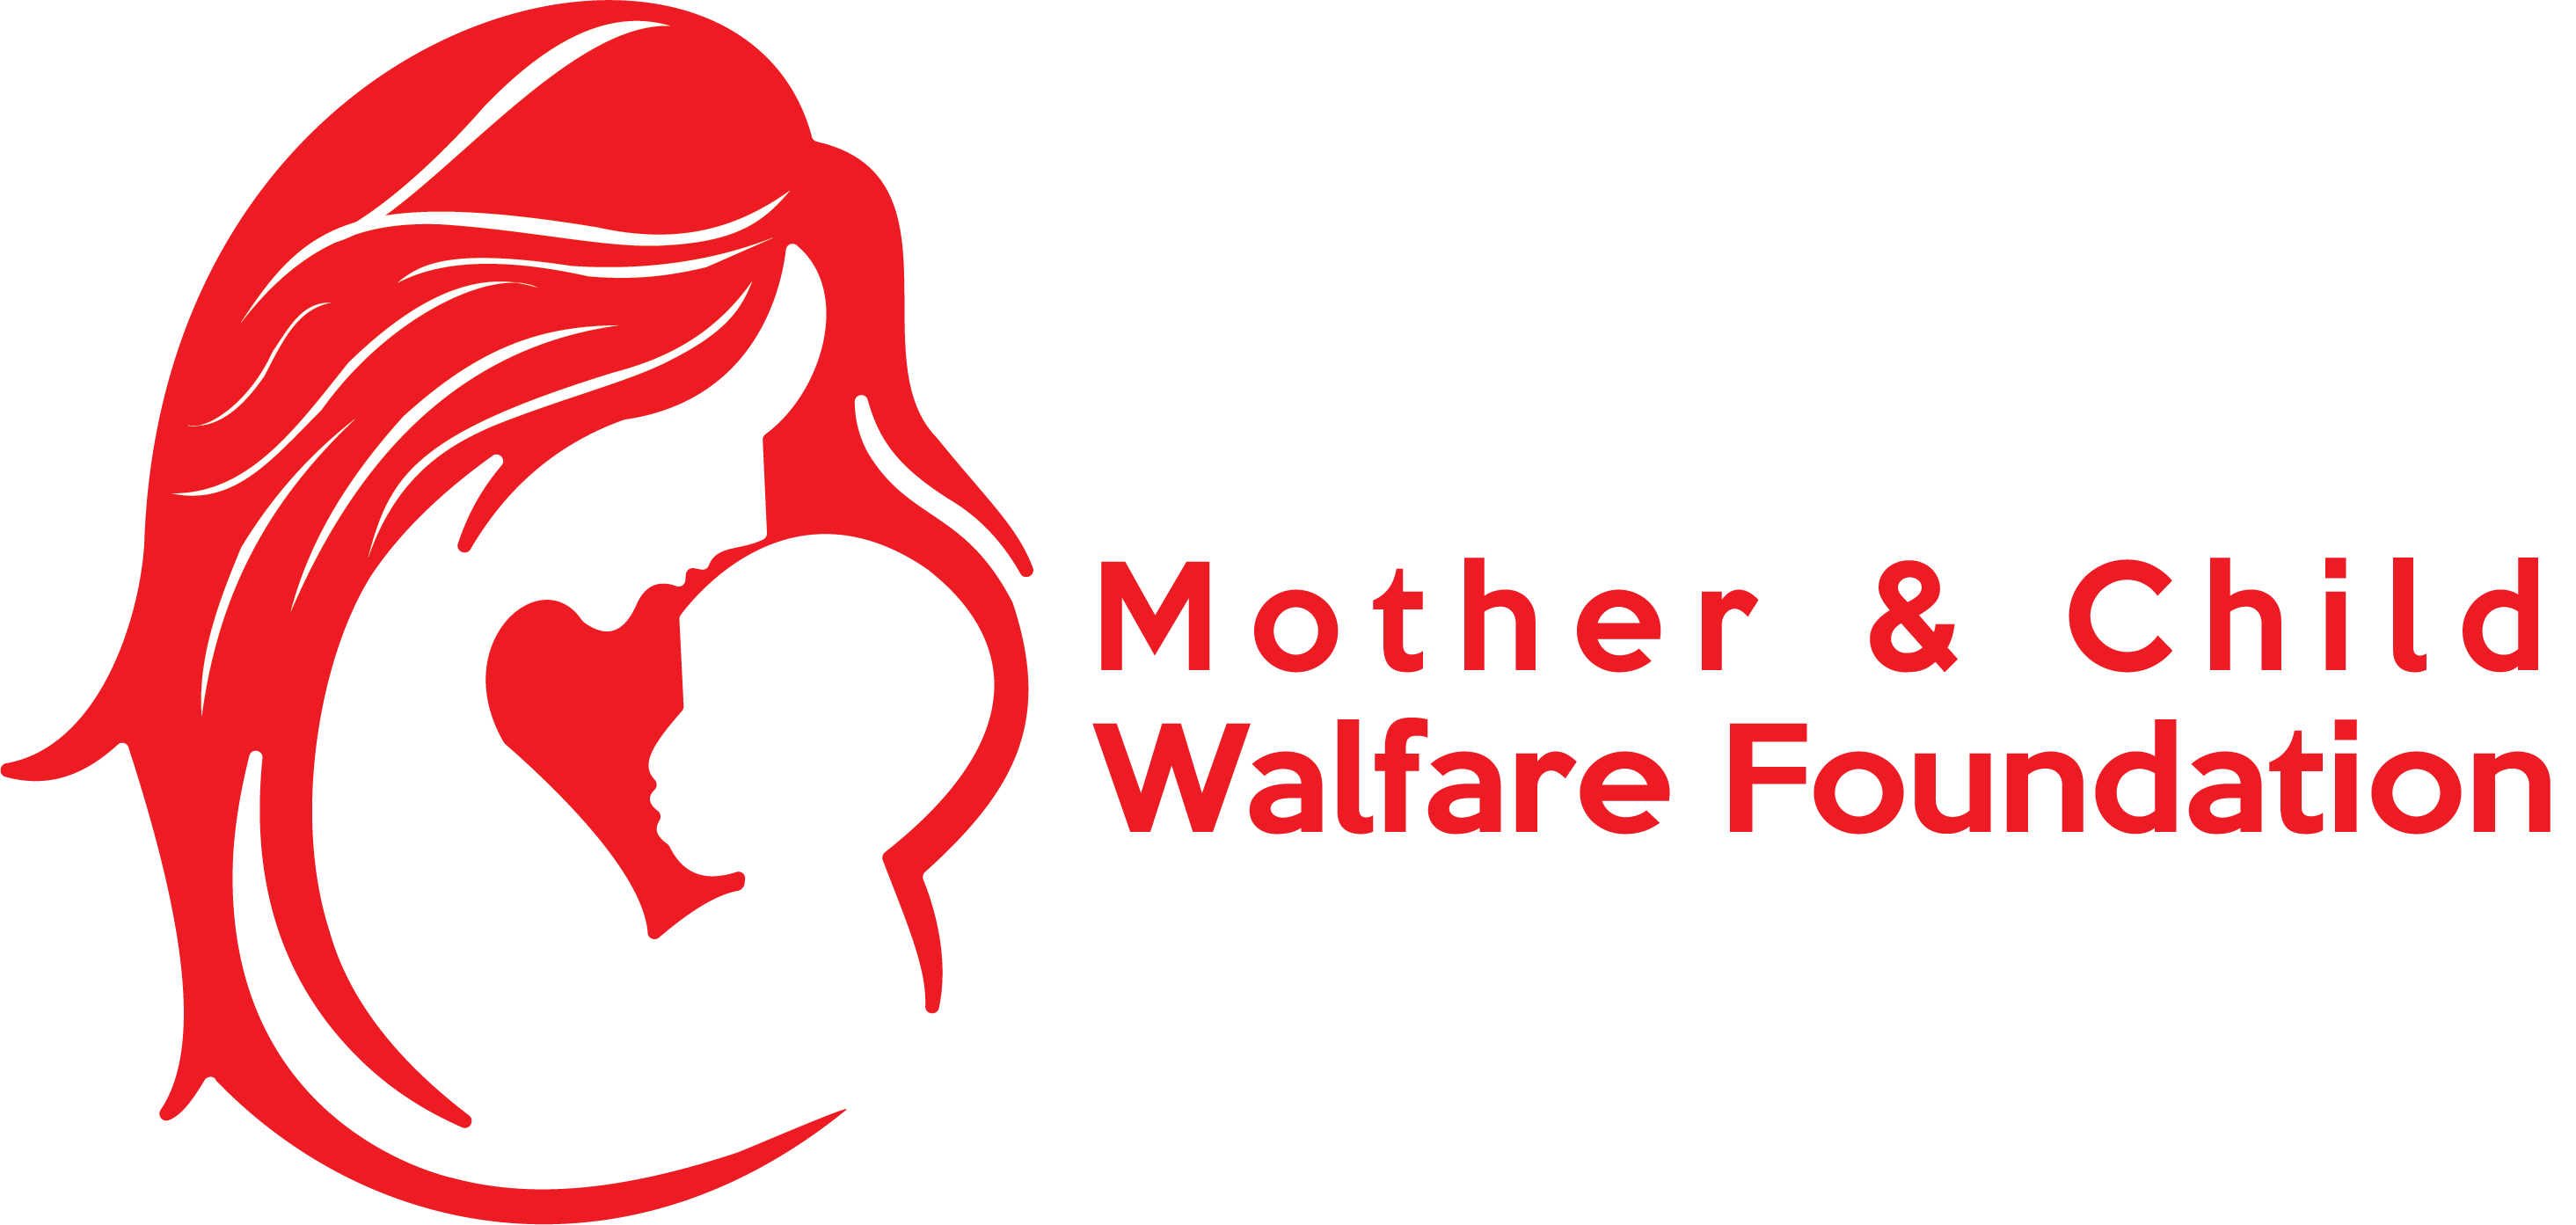 Mother & Child Welfare Foundation